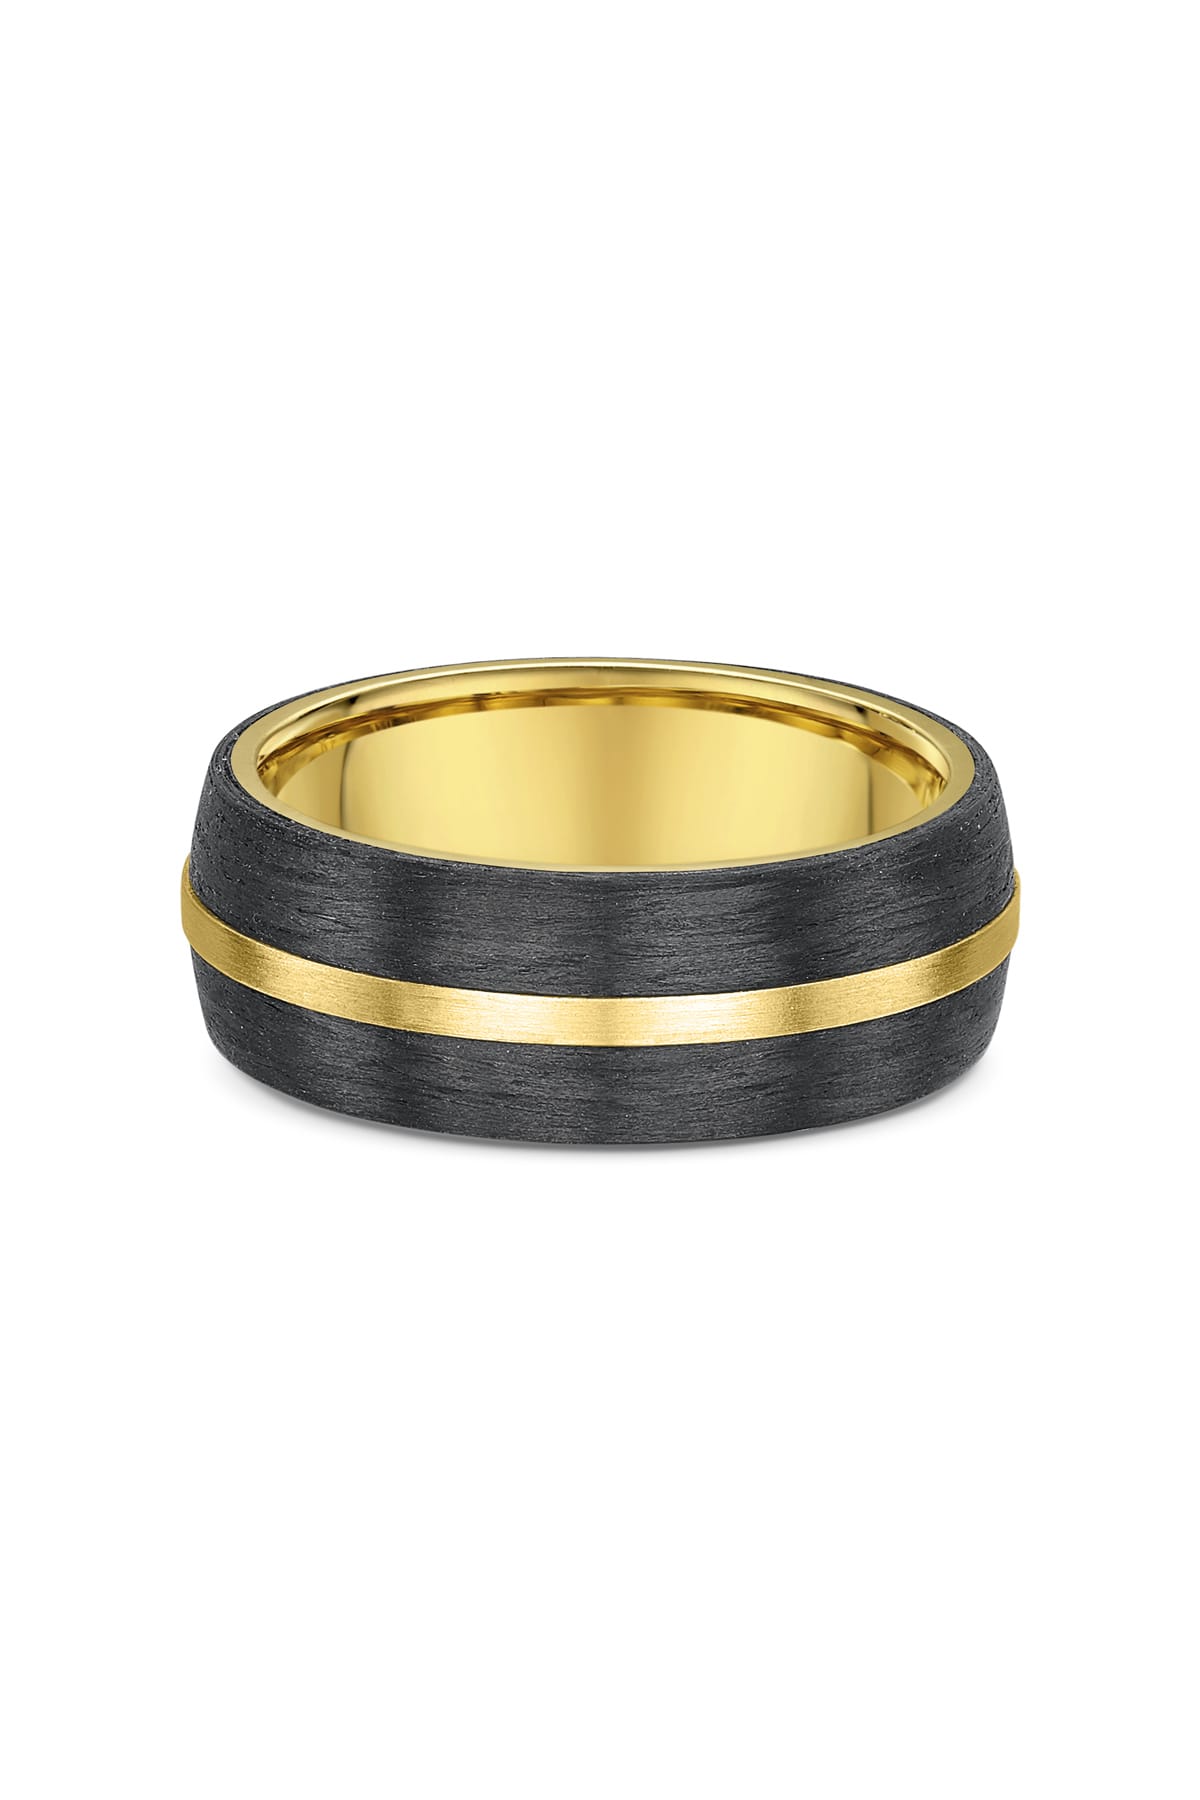 Men's Wedding Ring 657B00 available at LeGassick Diamonds and Jewellery Gold Coast, Australia.